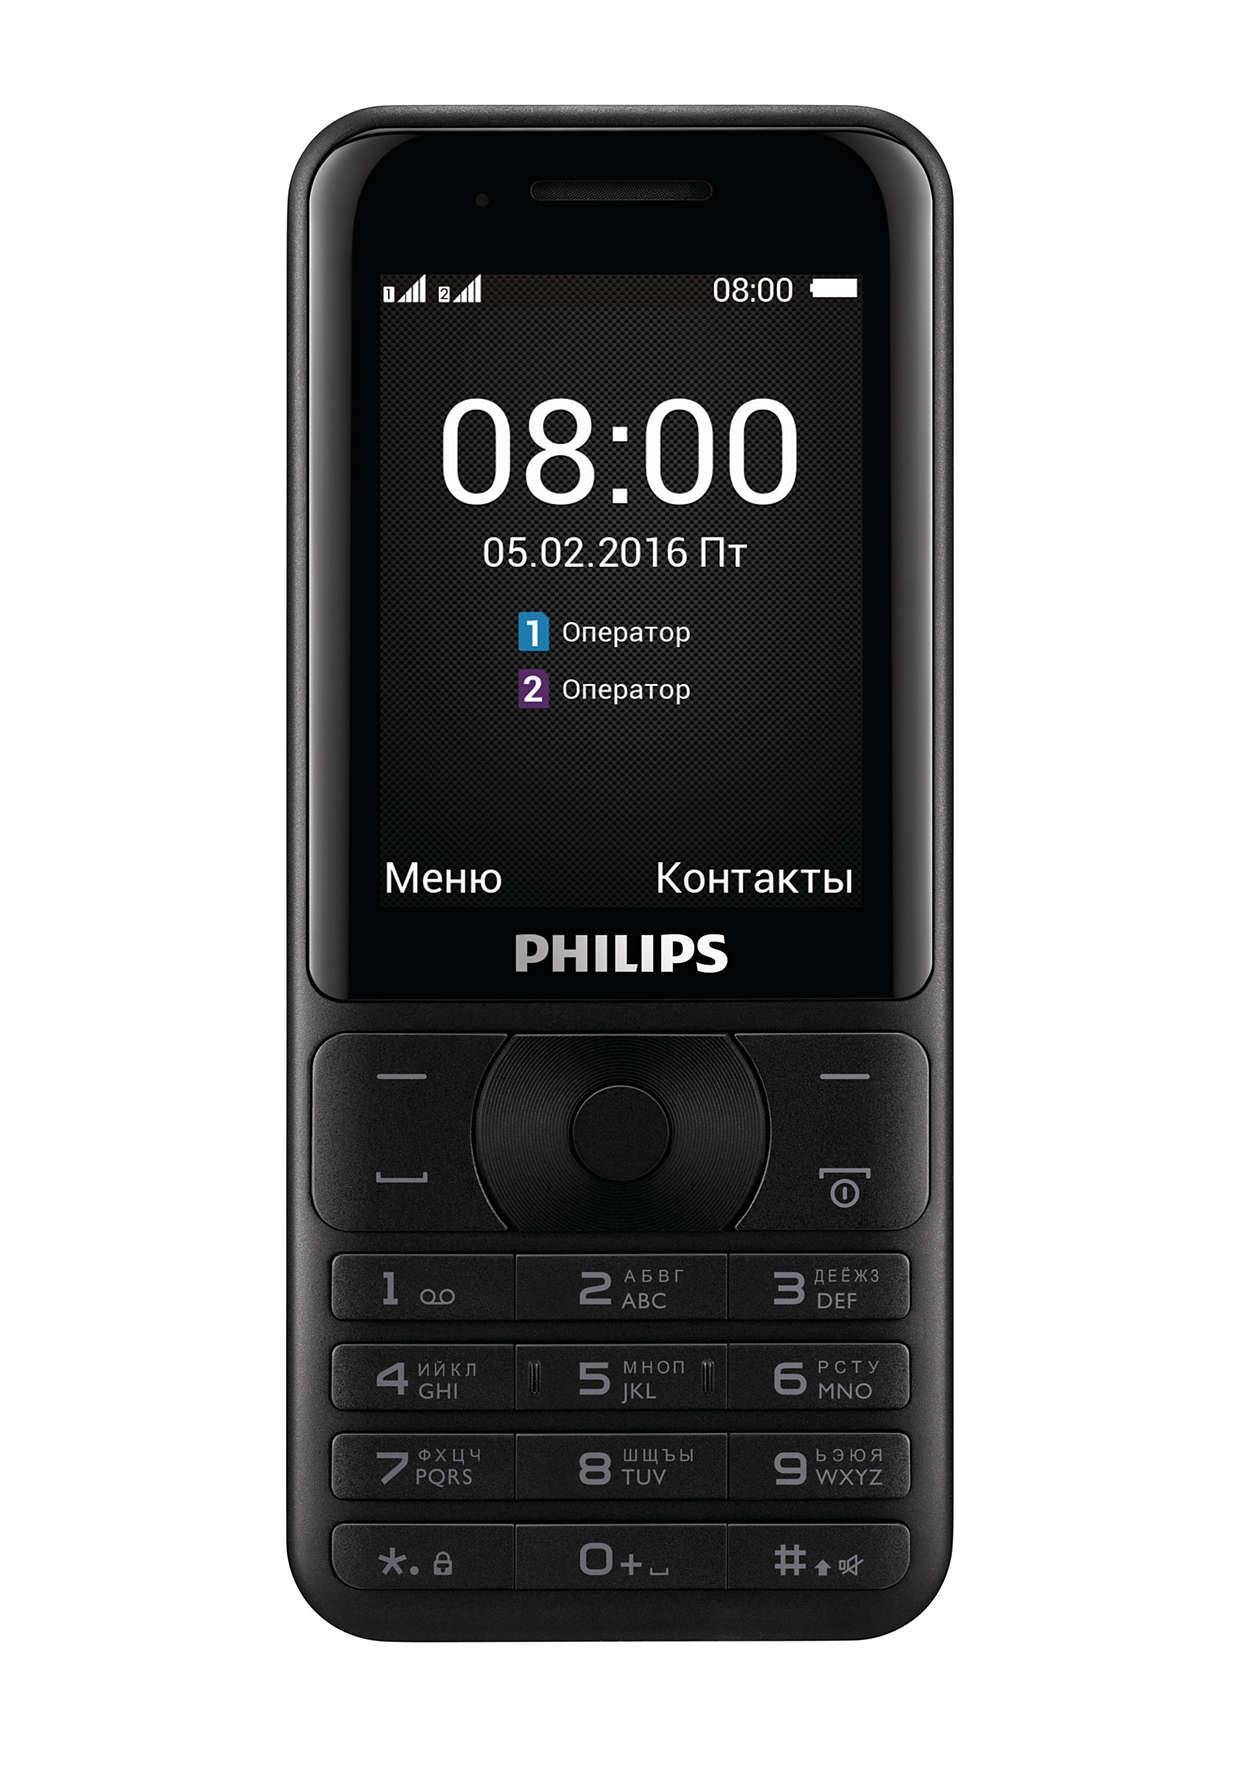 Philips Xenium e181. Philips Xenium e570 Dual SIM Black. Филипс ксениум е570. Мобильный телефон Philips Xenium e570. Филипс отзывы кнопочный